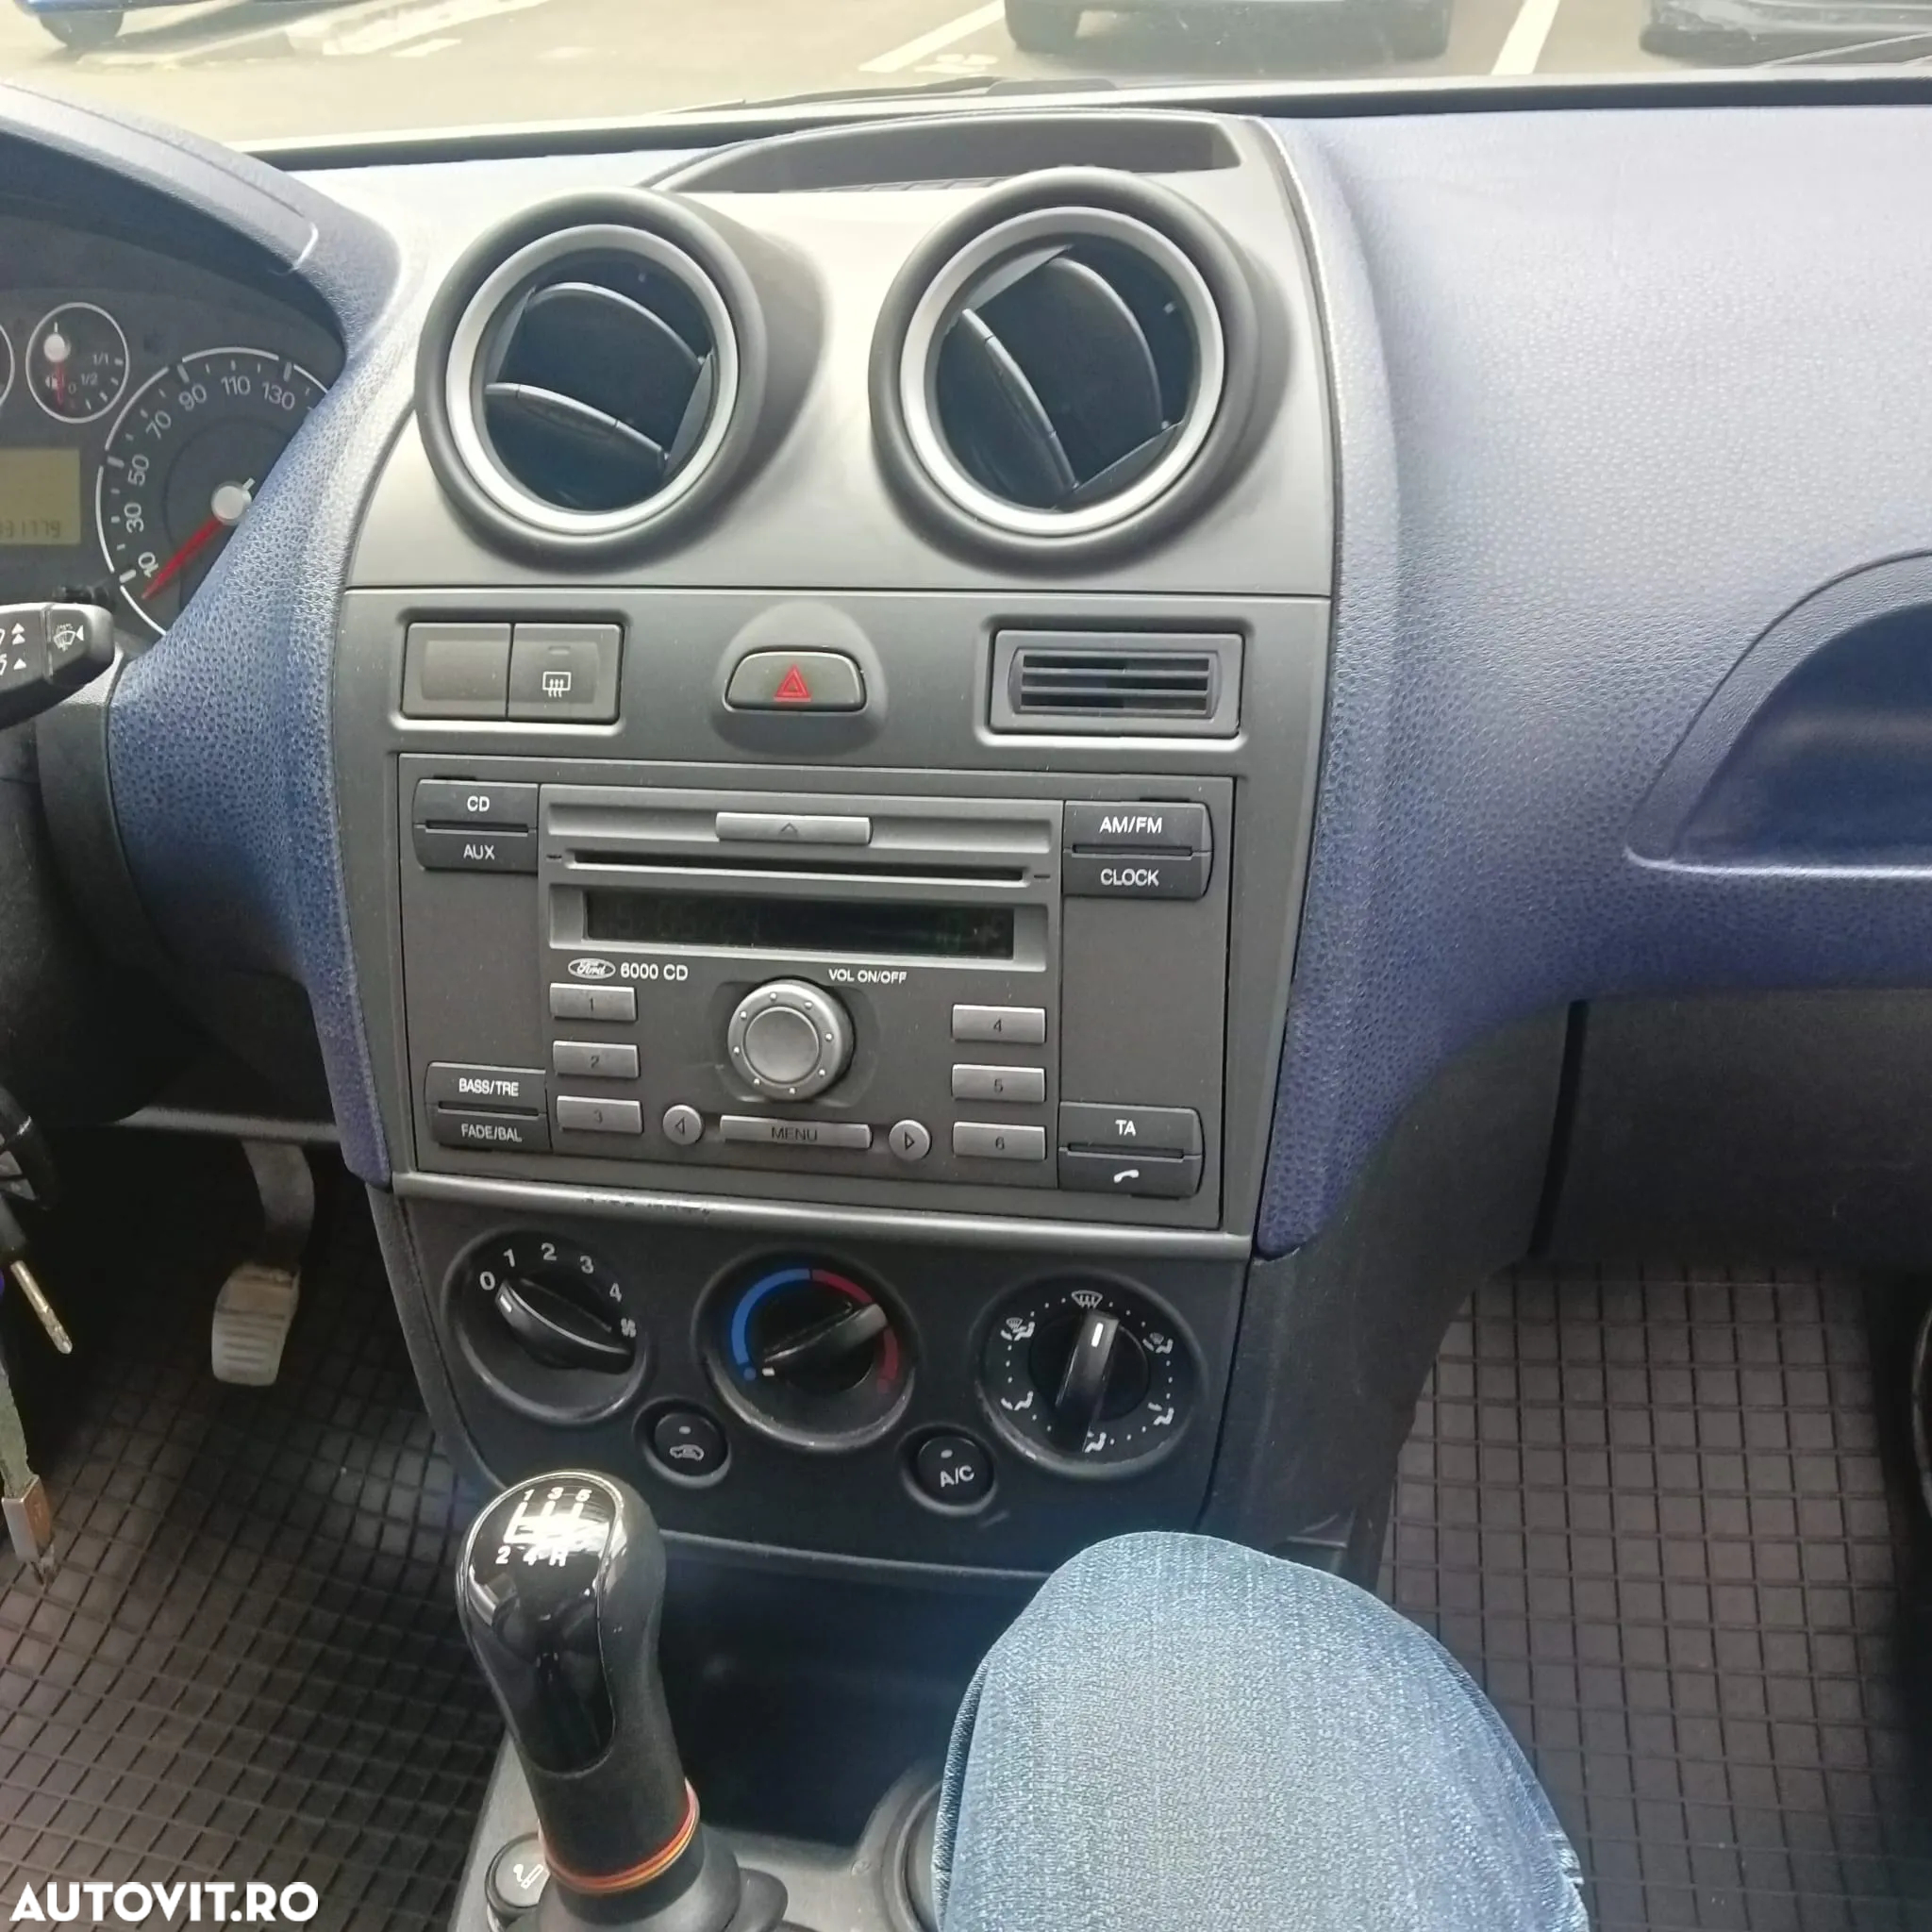 Ford Fiesta - 12